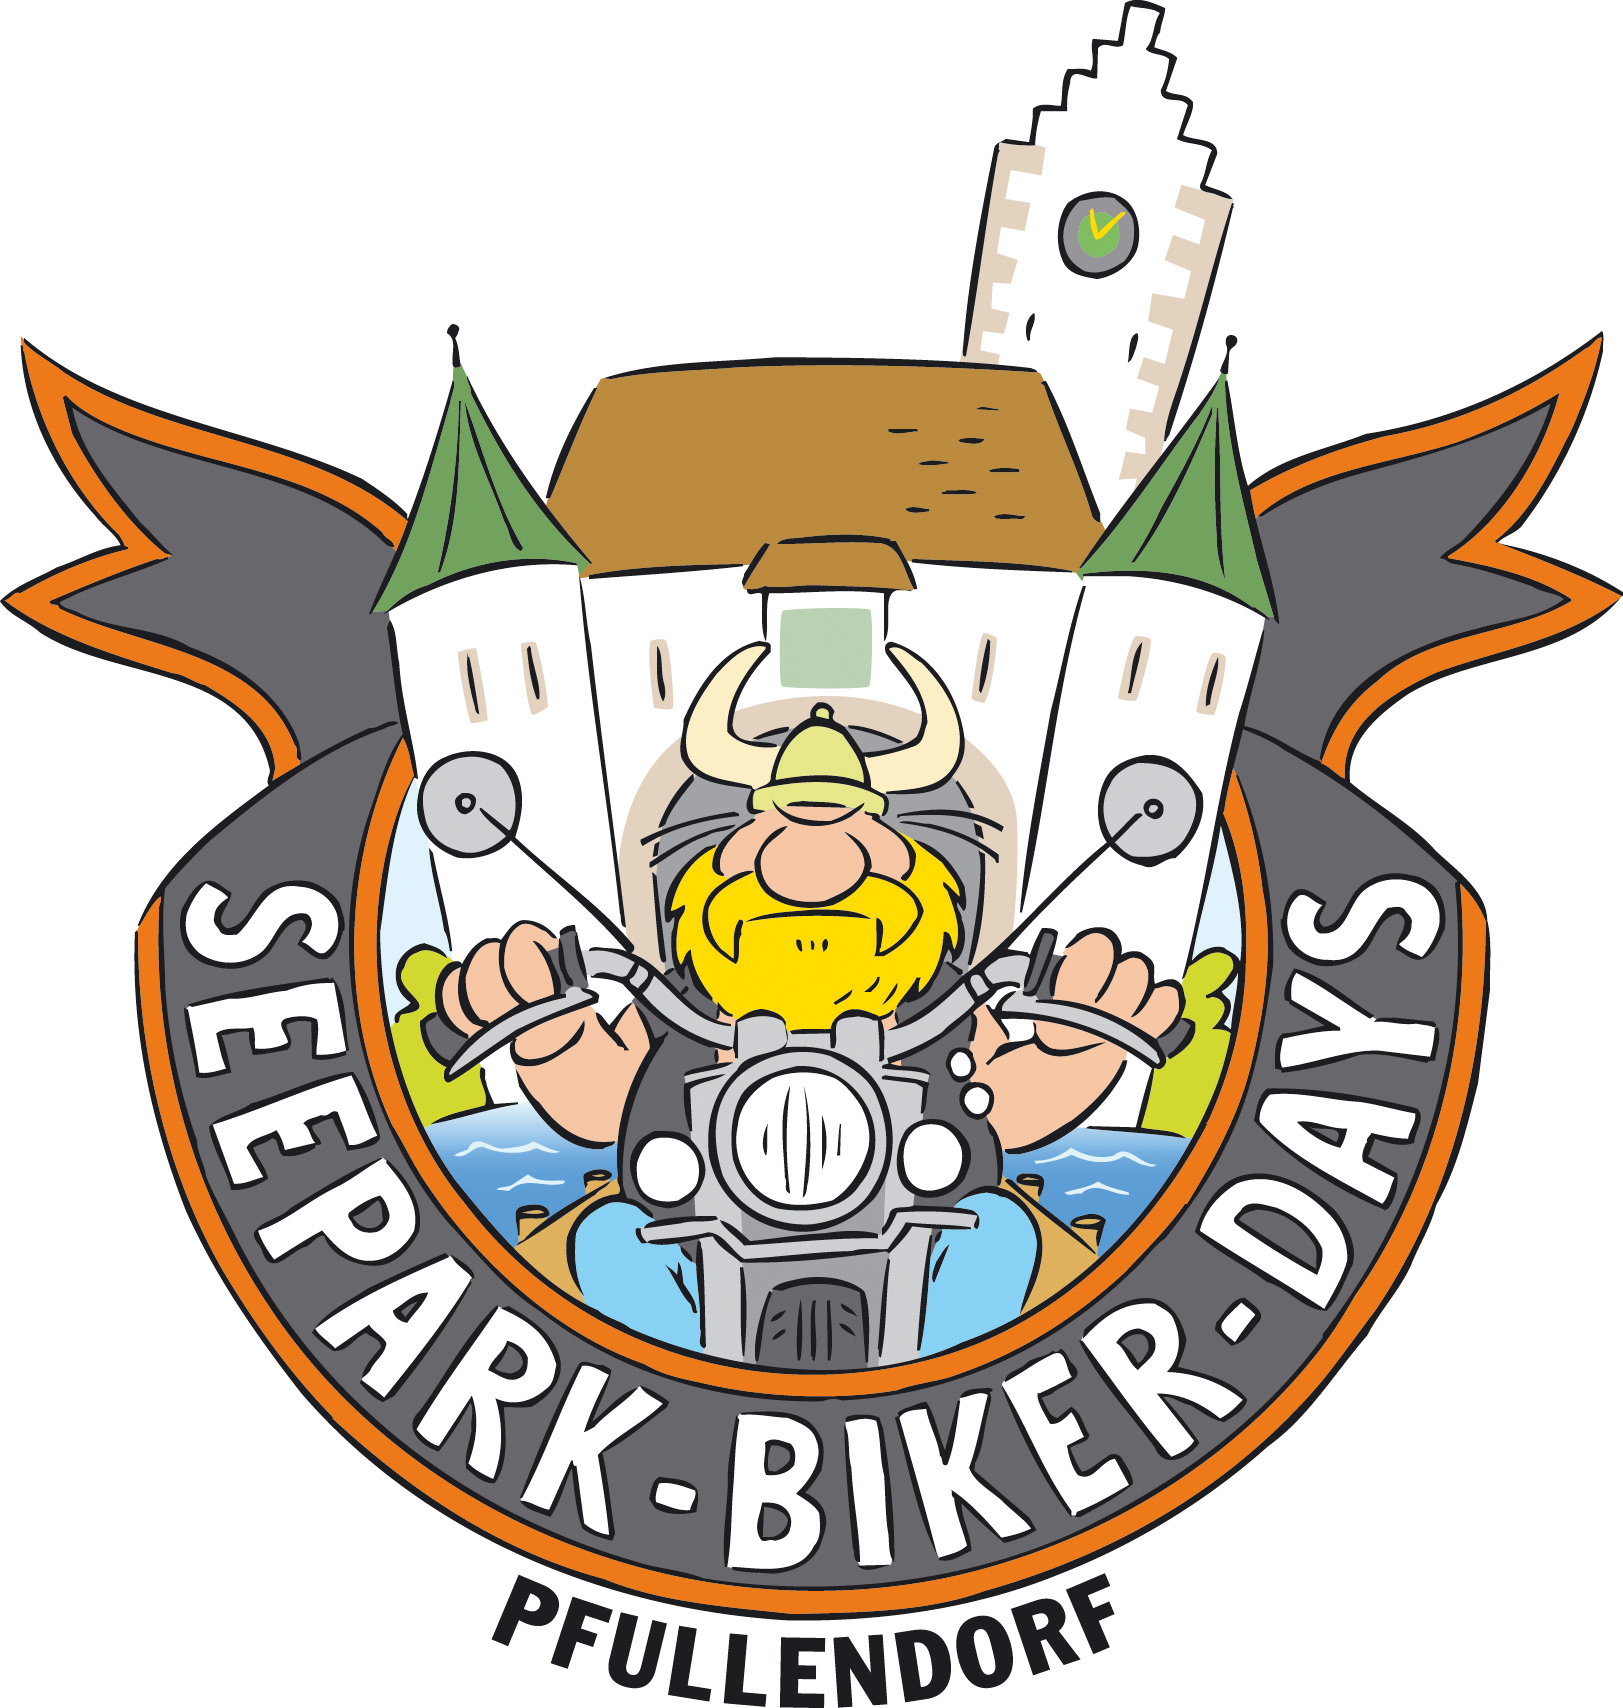  cc: Seepark-Biker-Days GbR